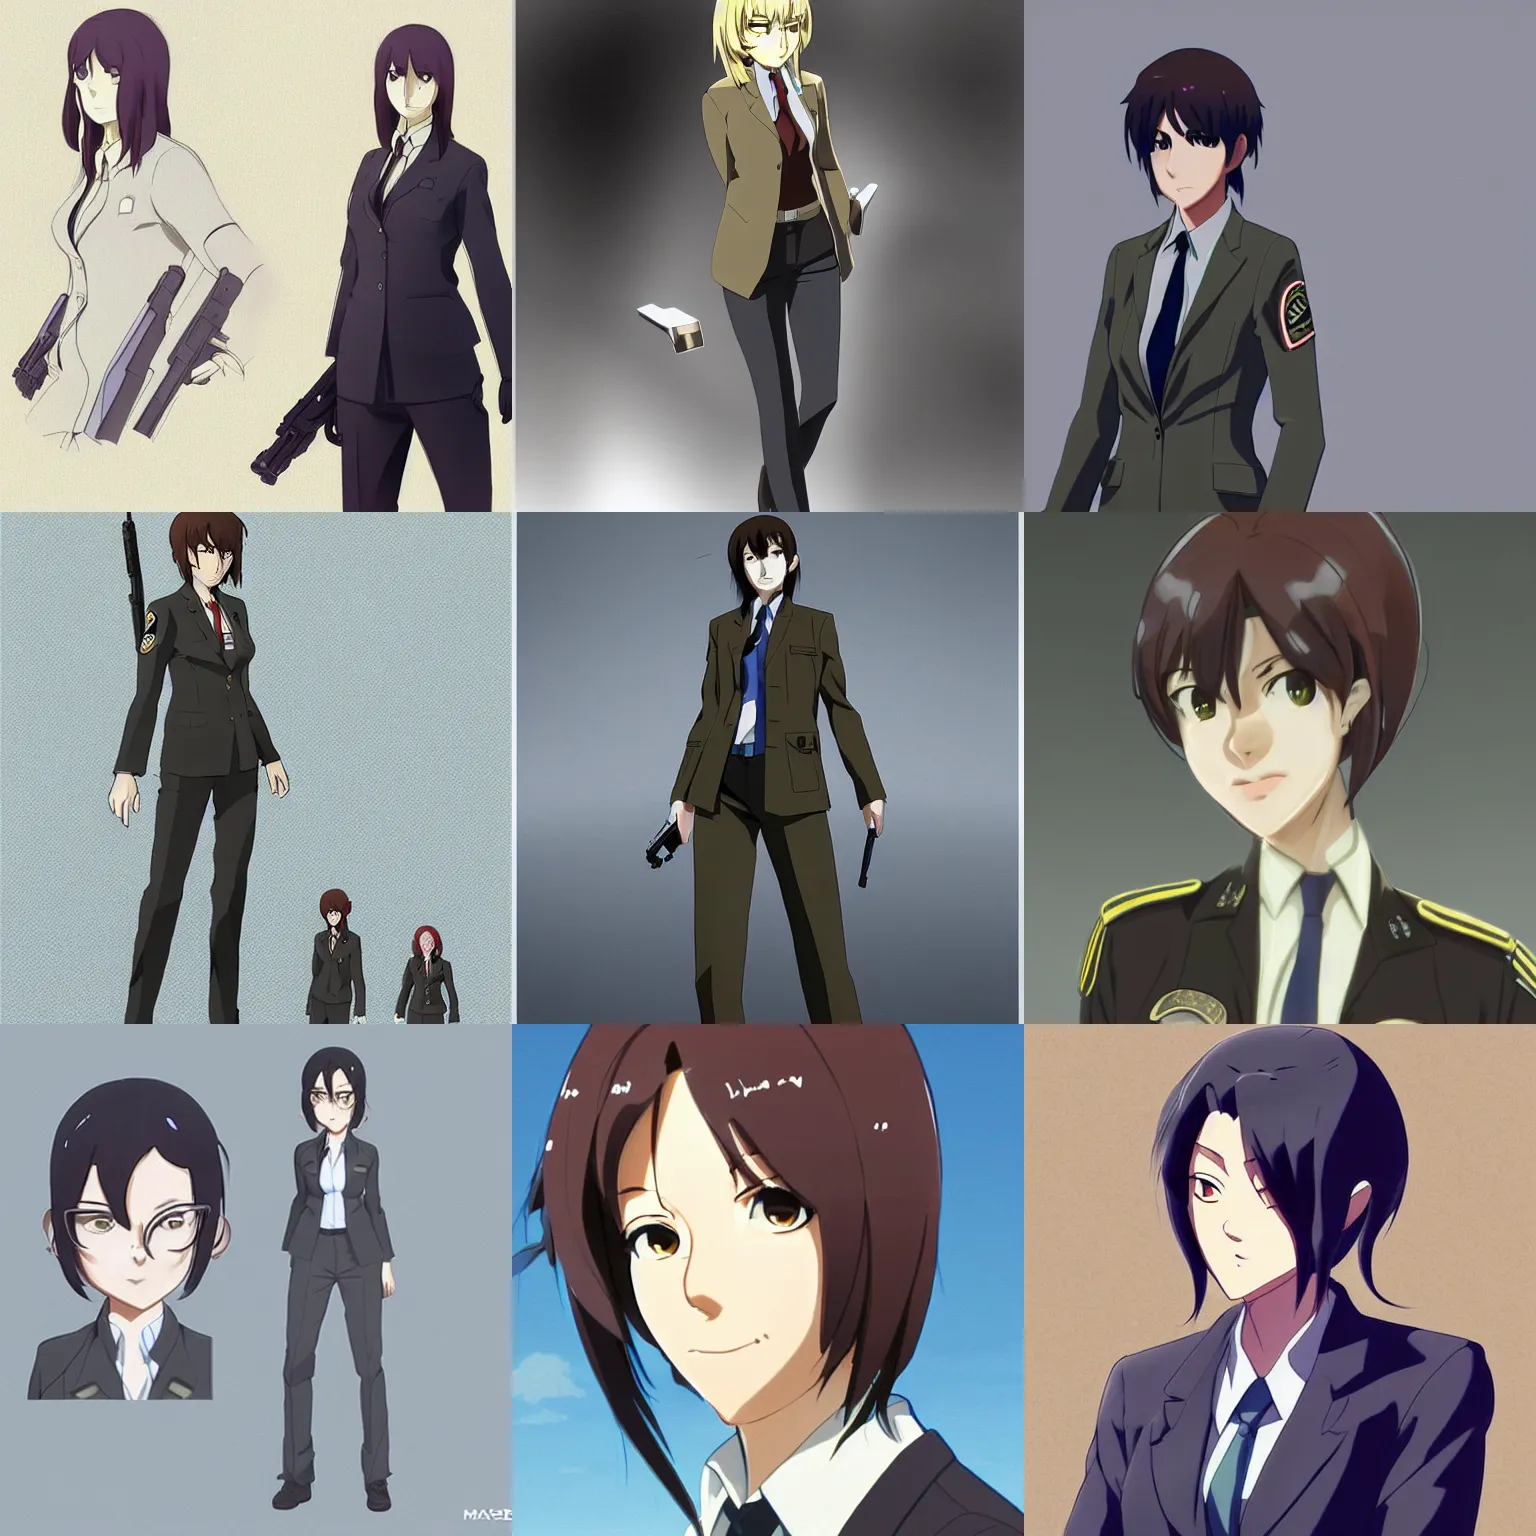 Prompt: female FBI agent, concept art, from the comedy anime film by makoto shinkai